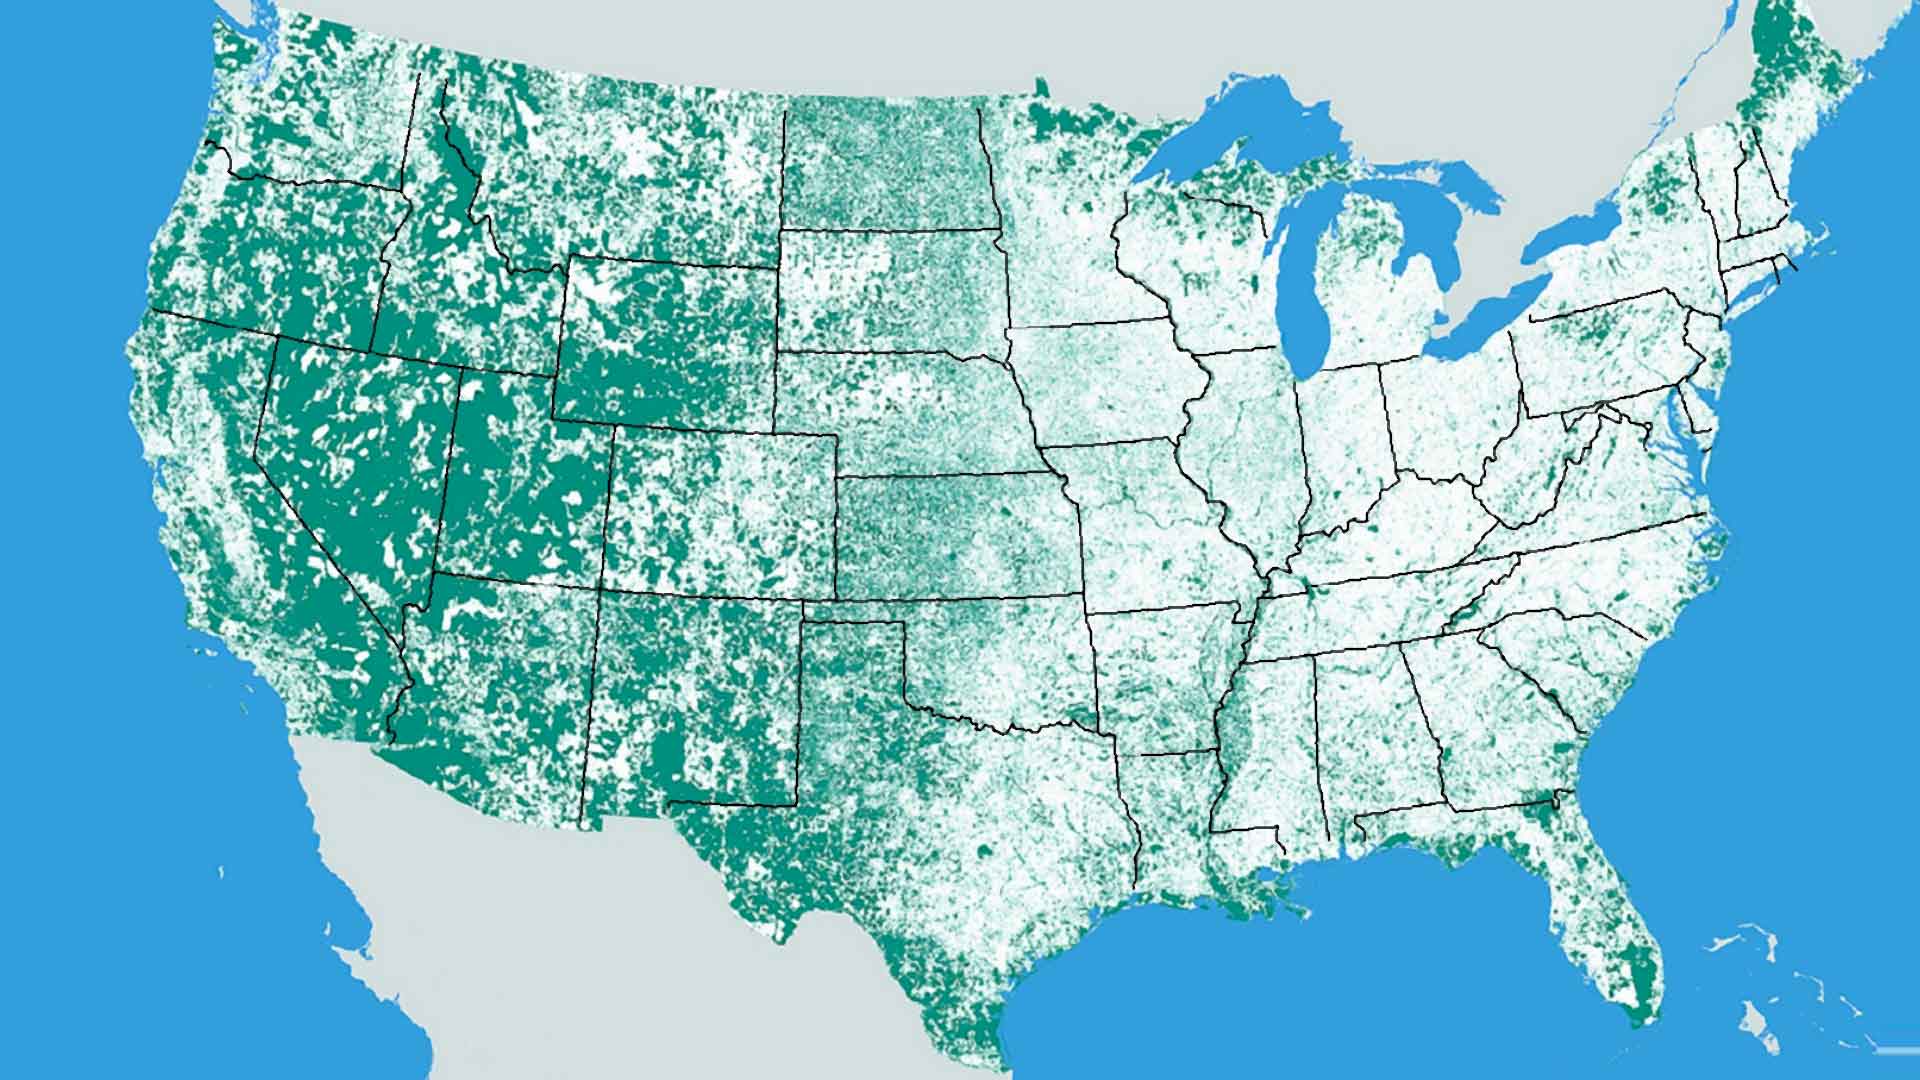 Nobody Lives Here: The Zero Population Blocks of The United States